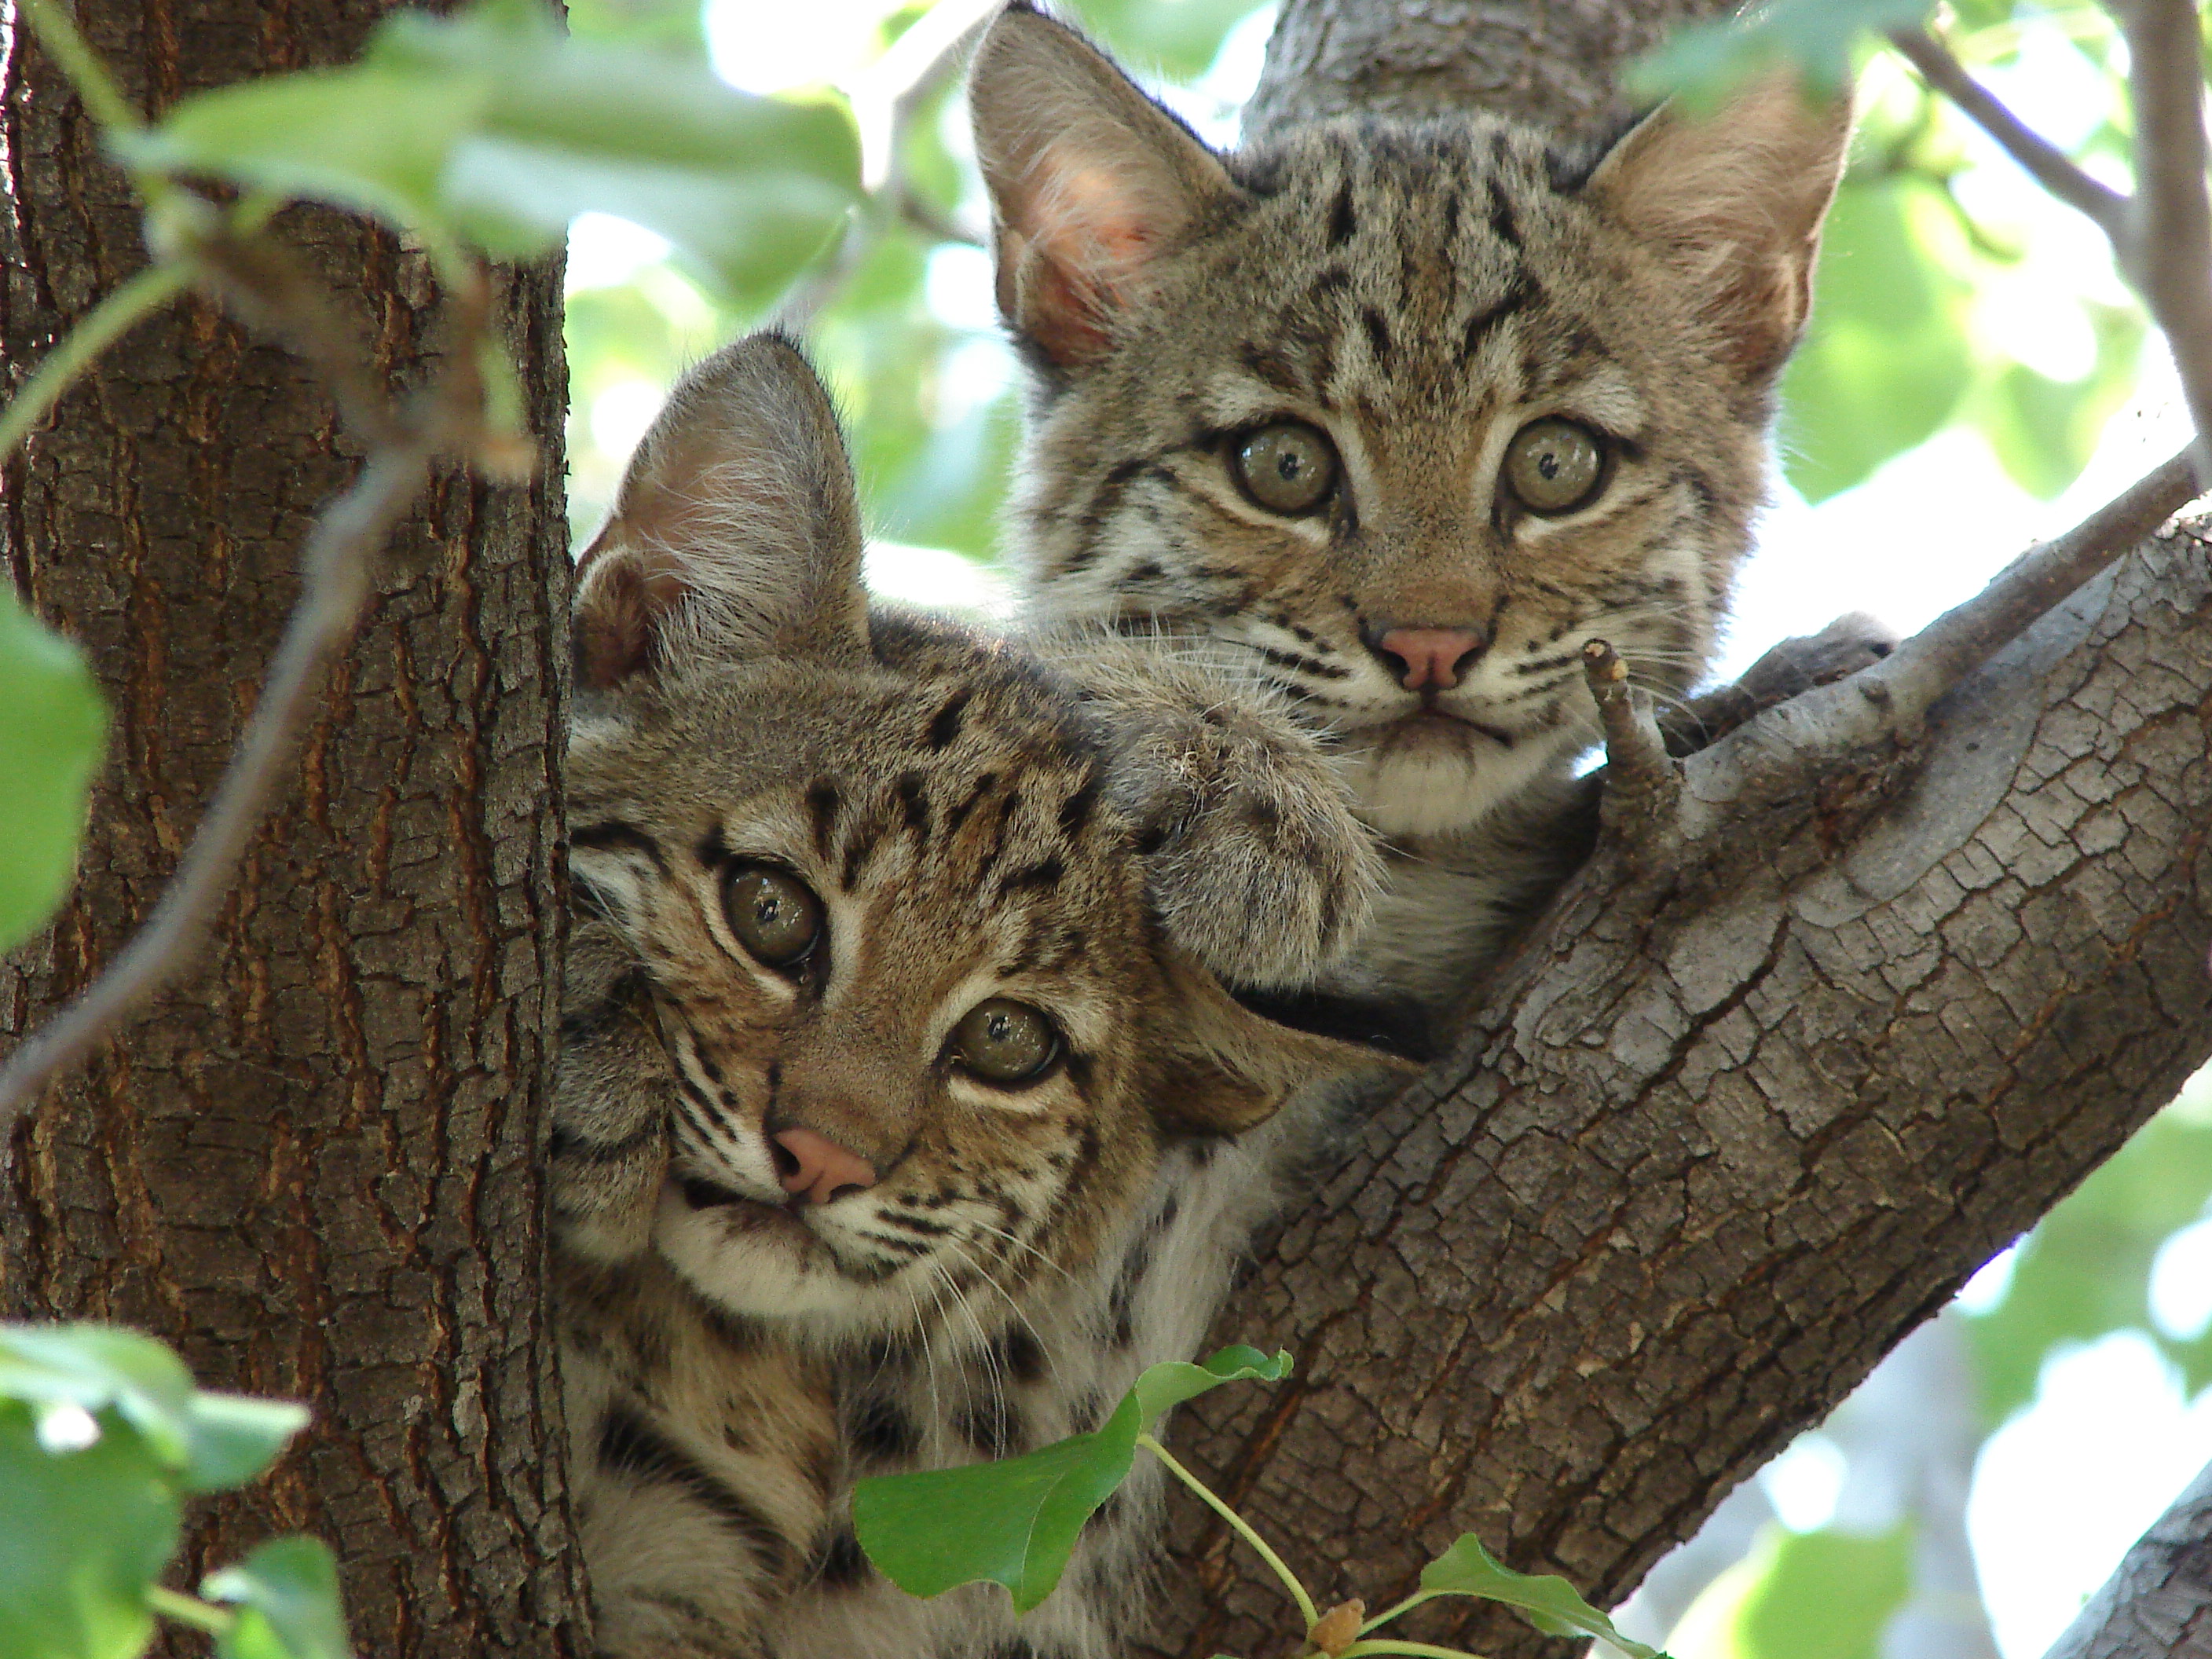 Bobcat kittens (Lynx rufus). Image credit: Summer M. Tribble, Creative Commons